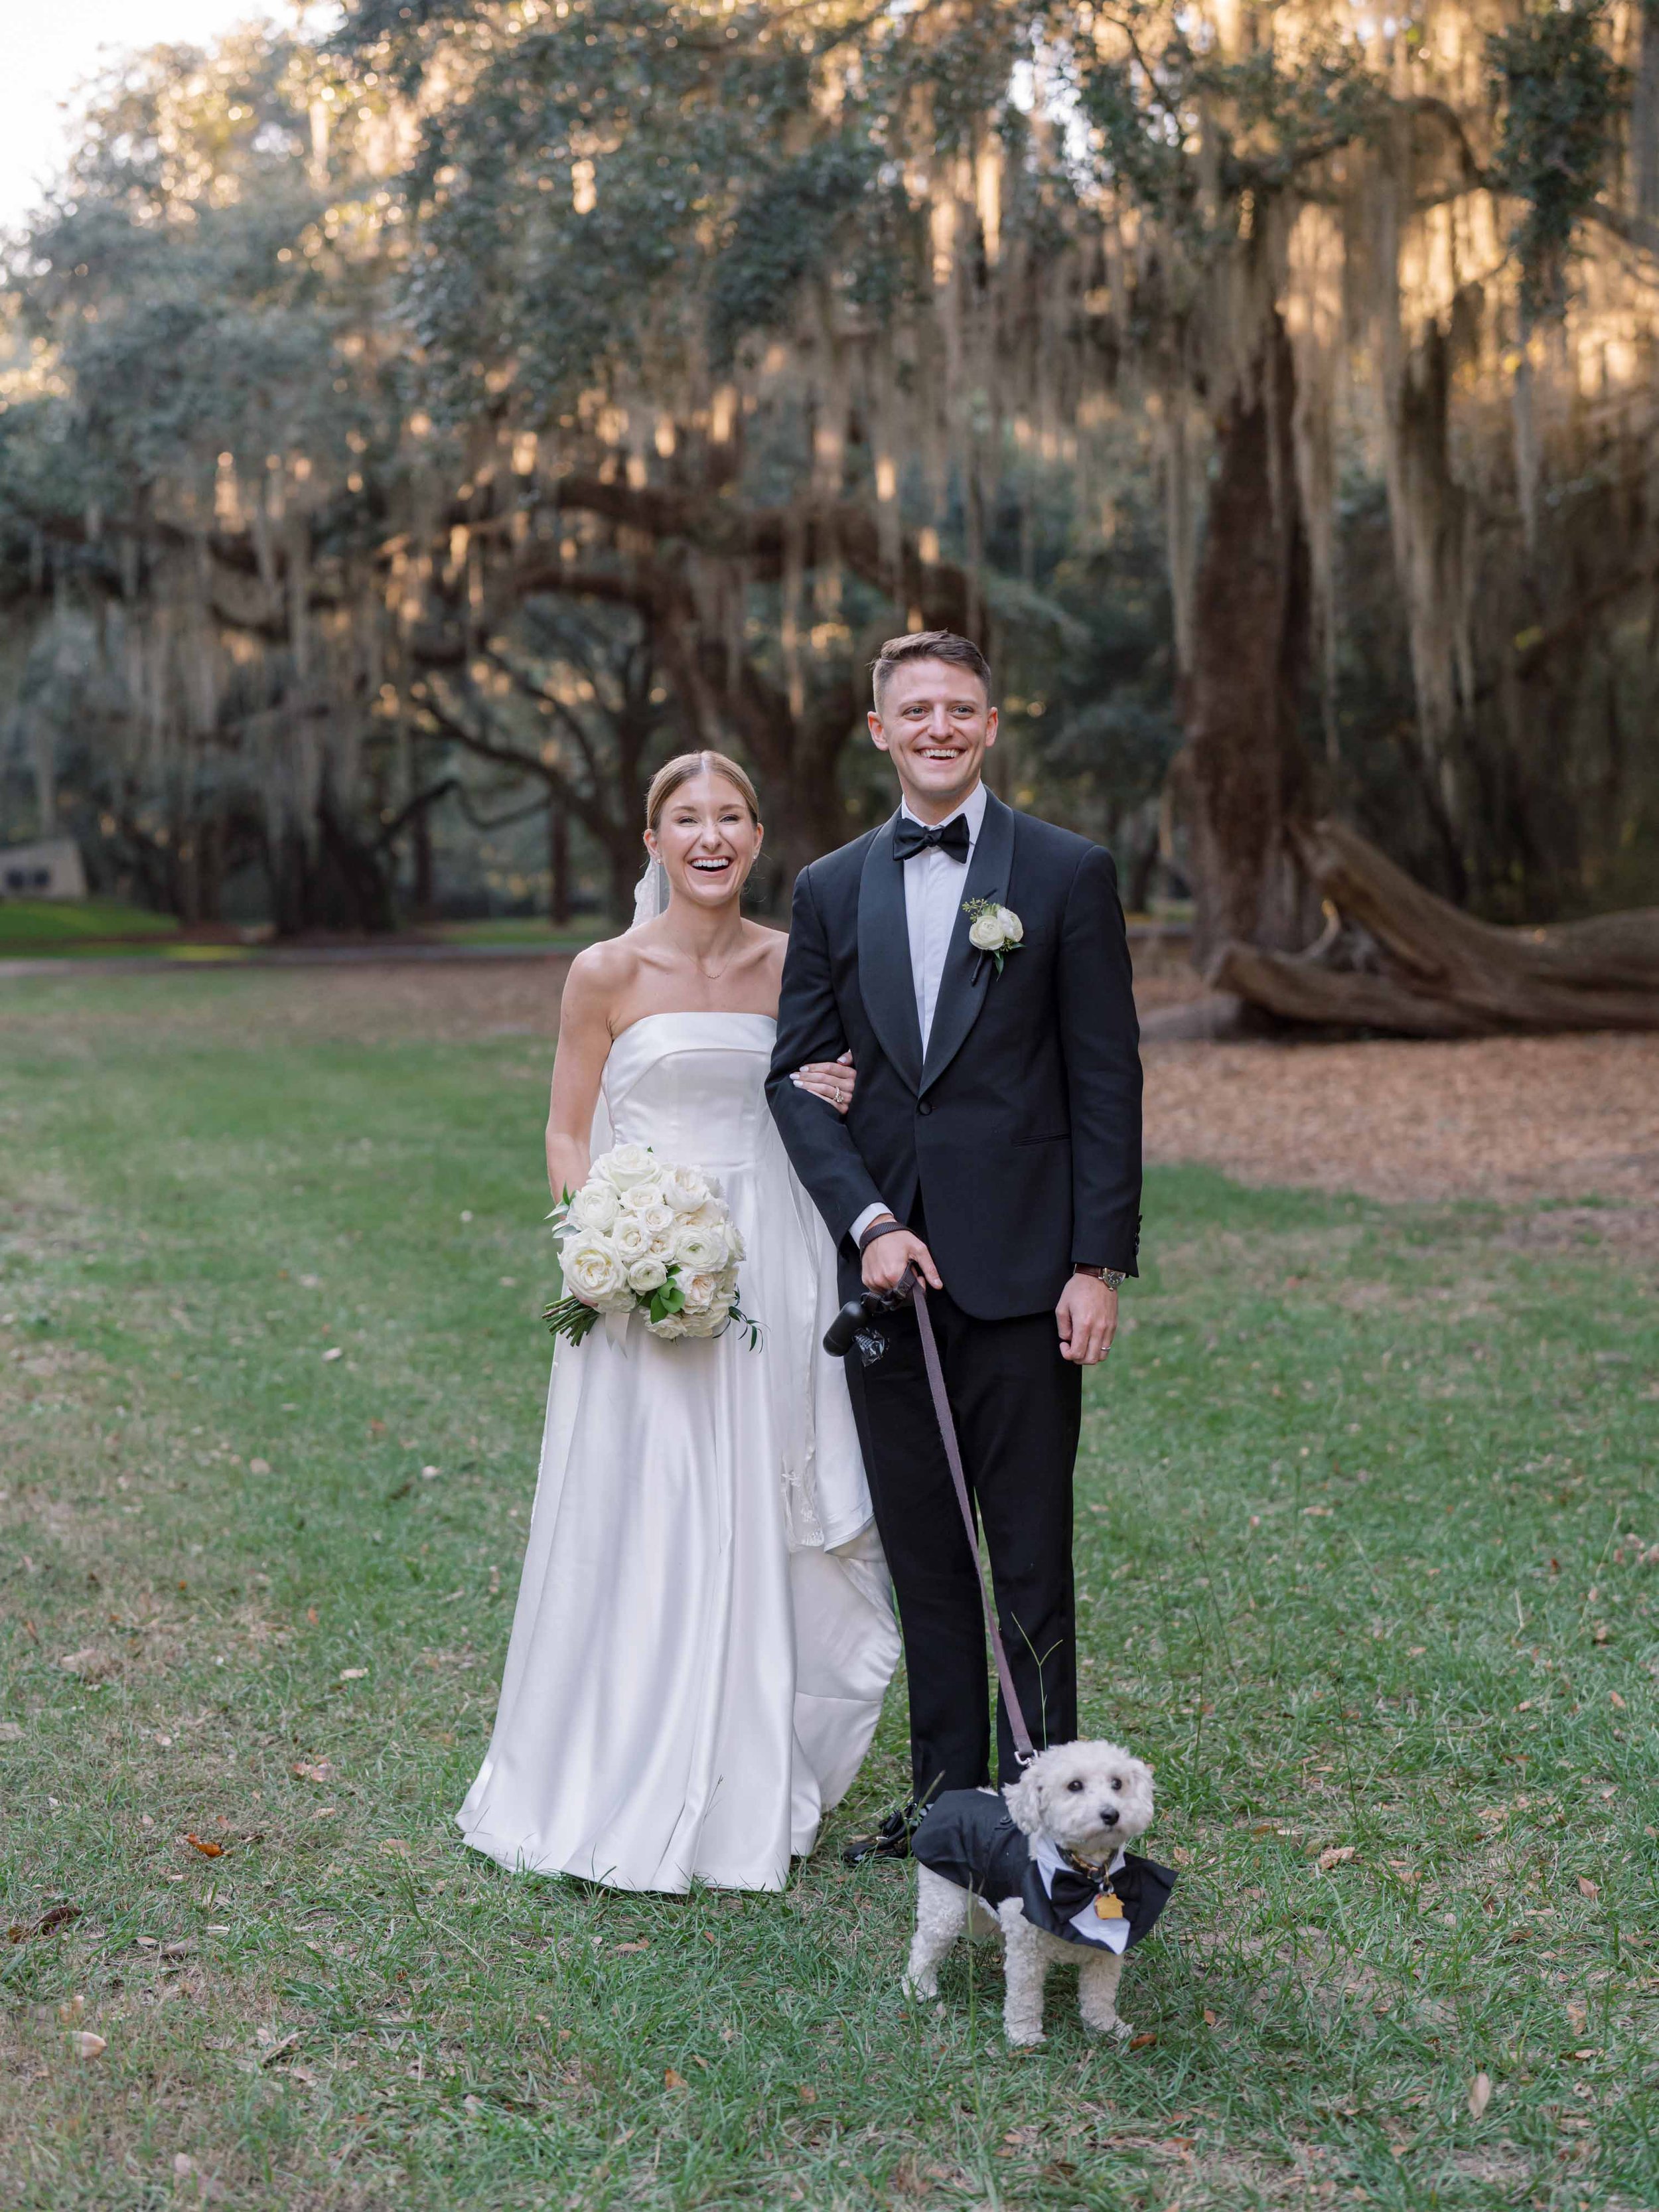 Elias-Felton-Spring-Island-South-Carolina-Wedding-Photographer-Holly-Felts-Photography-1012.jpg